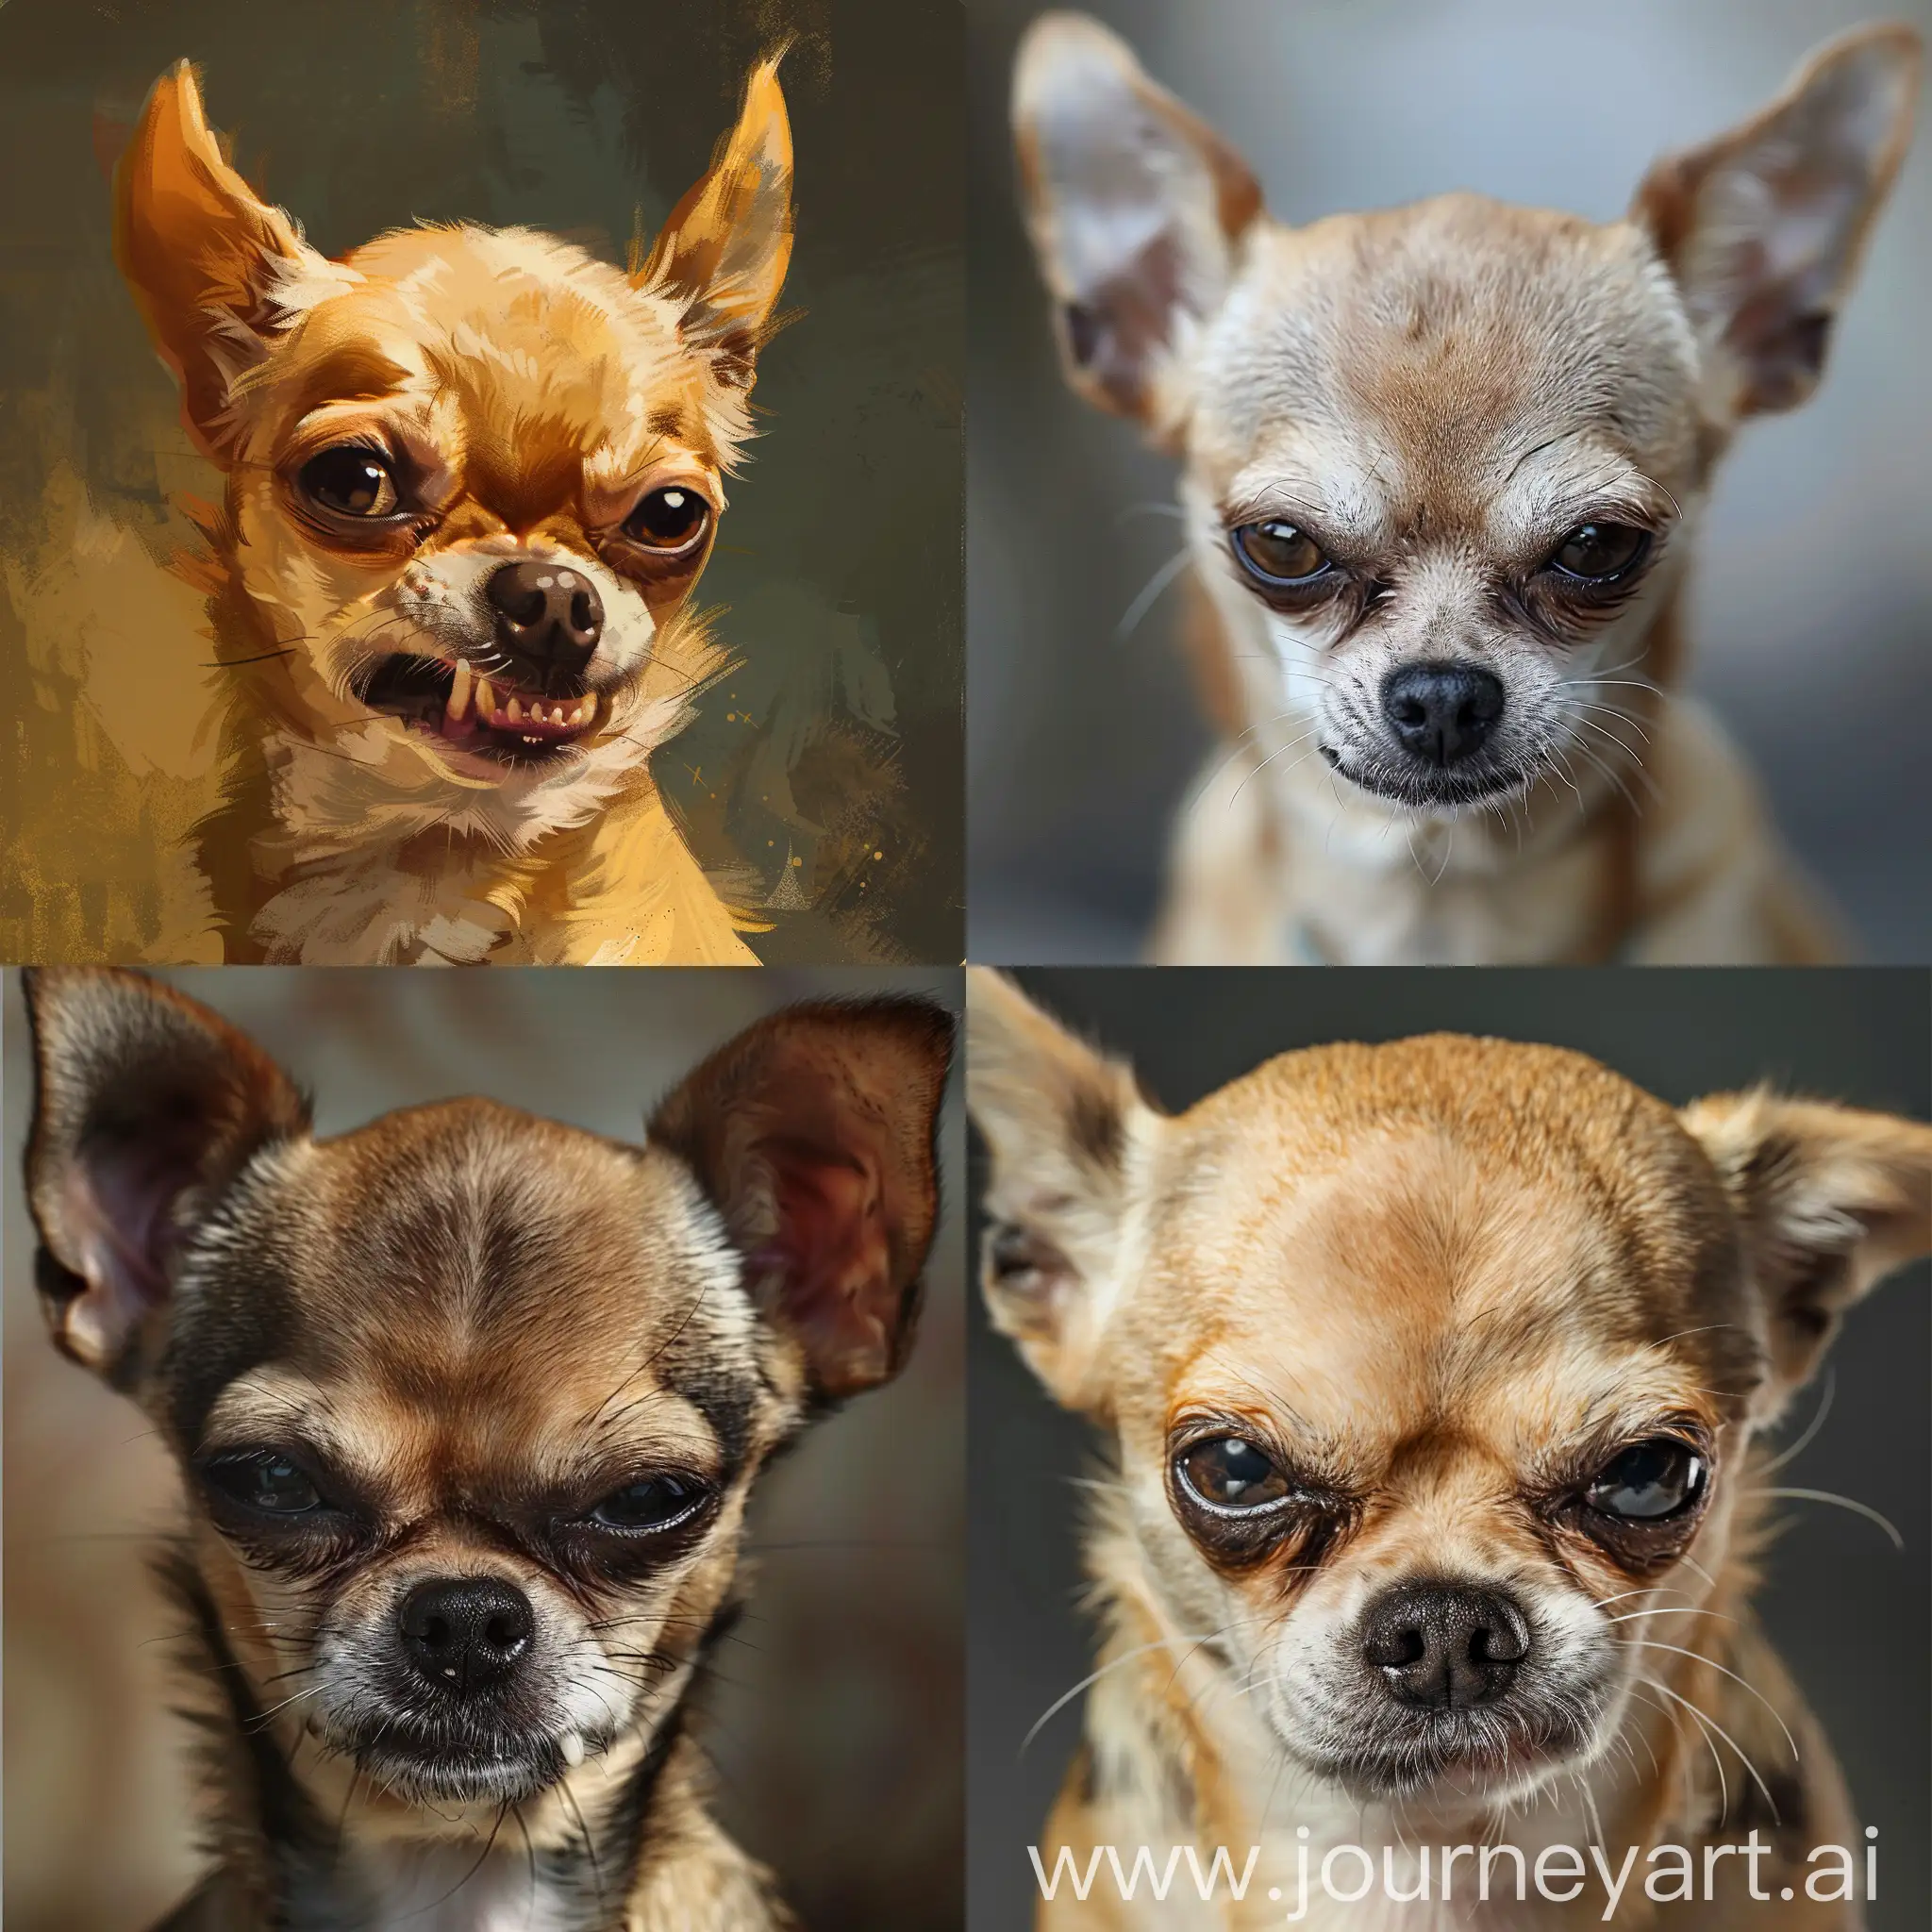 Fierce-Angry-Chihuahua-Baring-Teeth